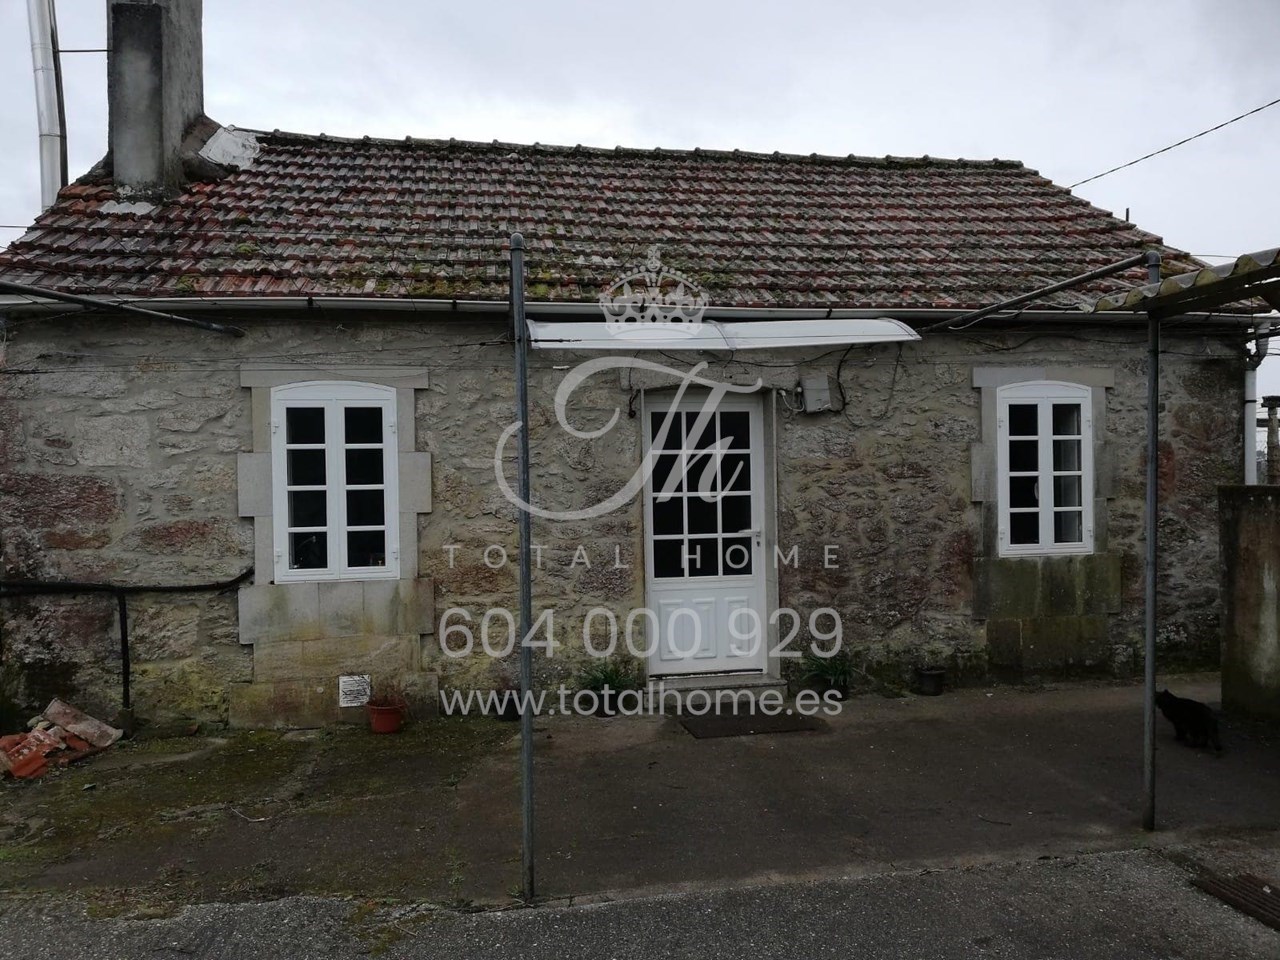 Foto 5 Total Home vende casa rural para restaurar en A Pedra - Teo